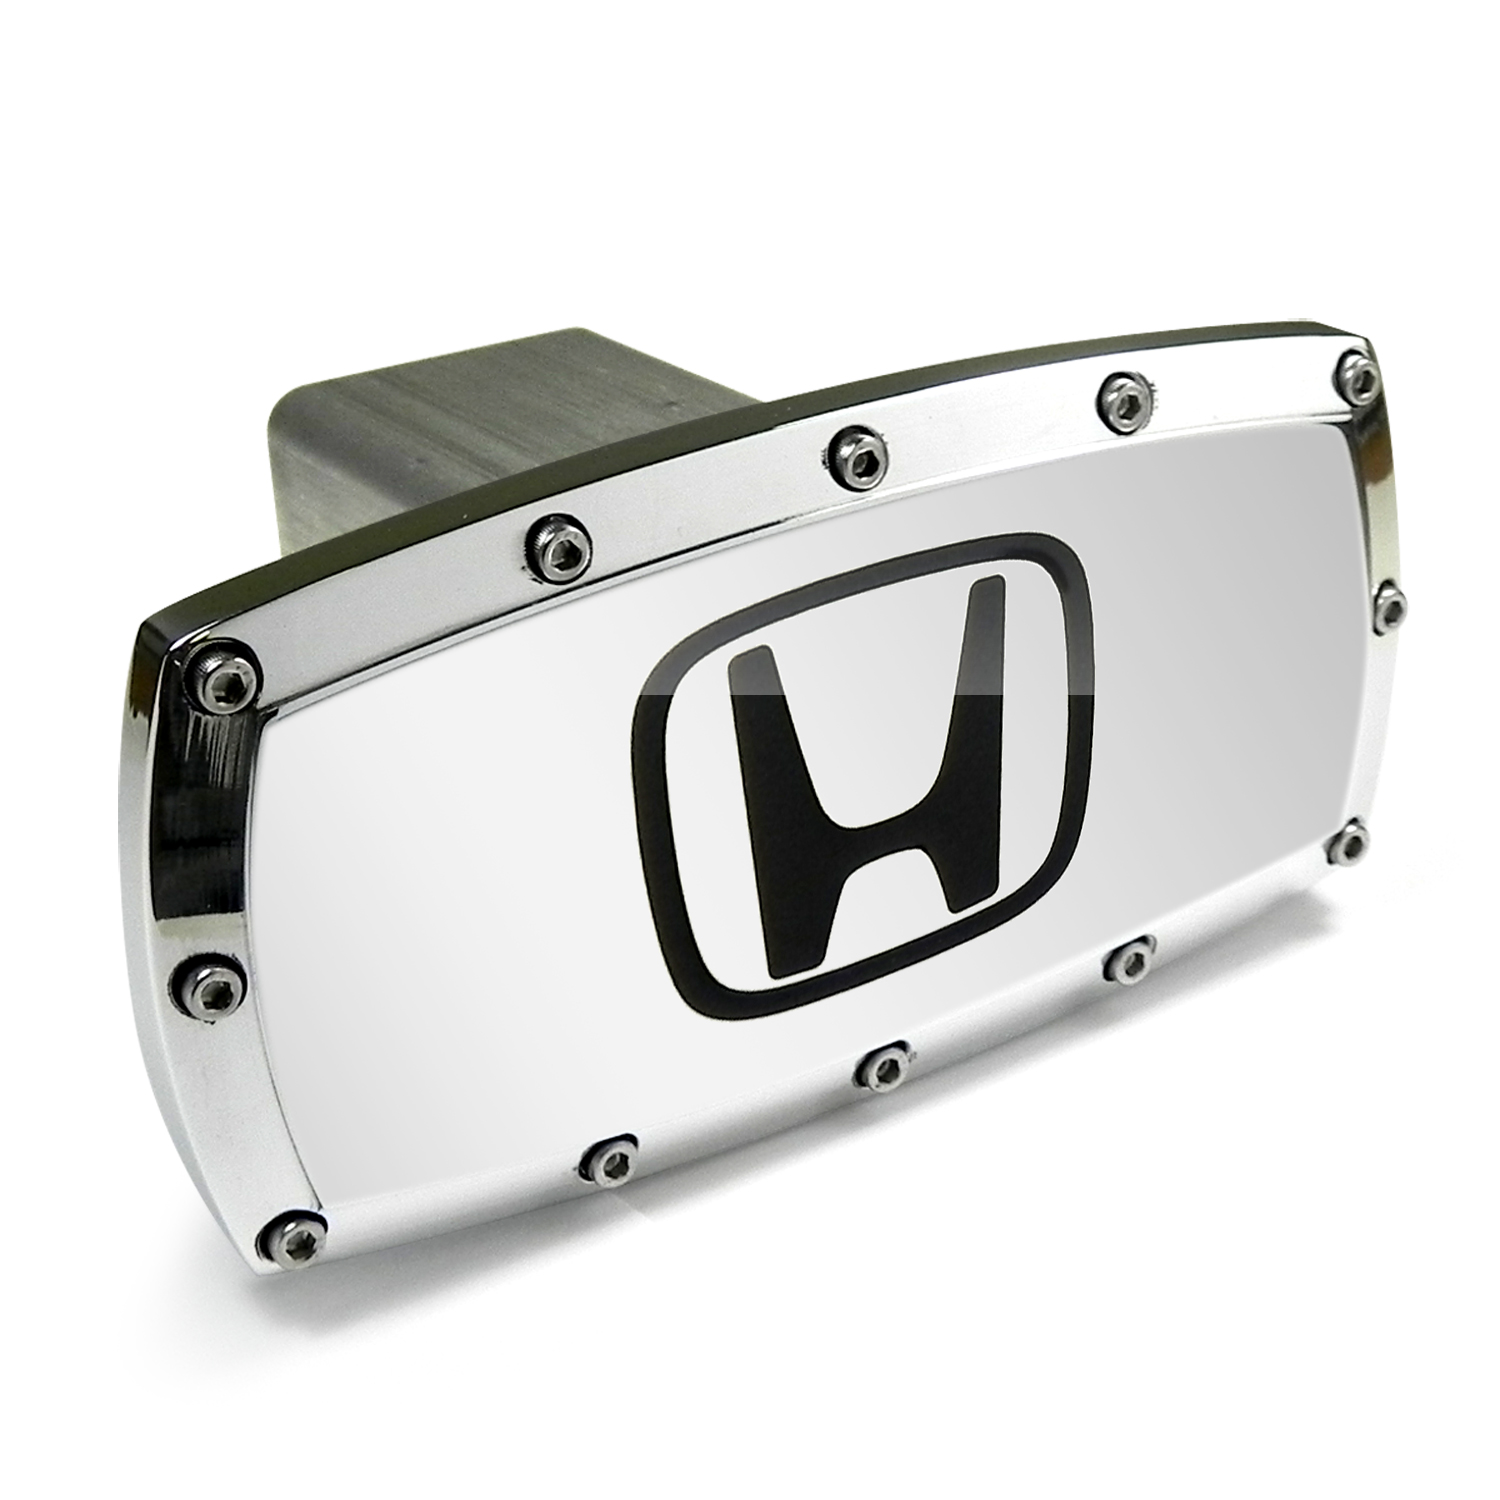 Honda Logo Billet Aluminum Tow Hitch Cover - image 1 of 2